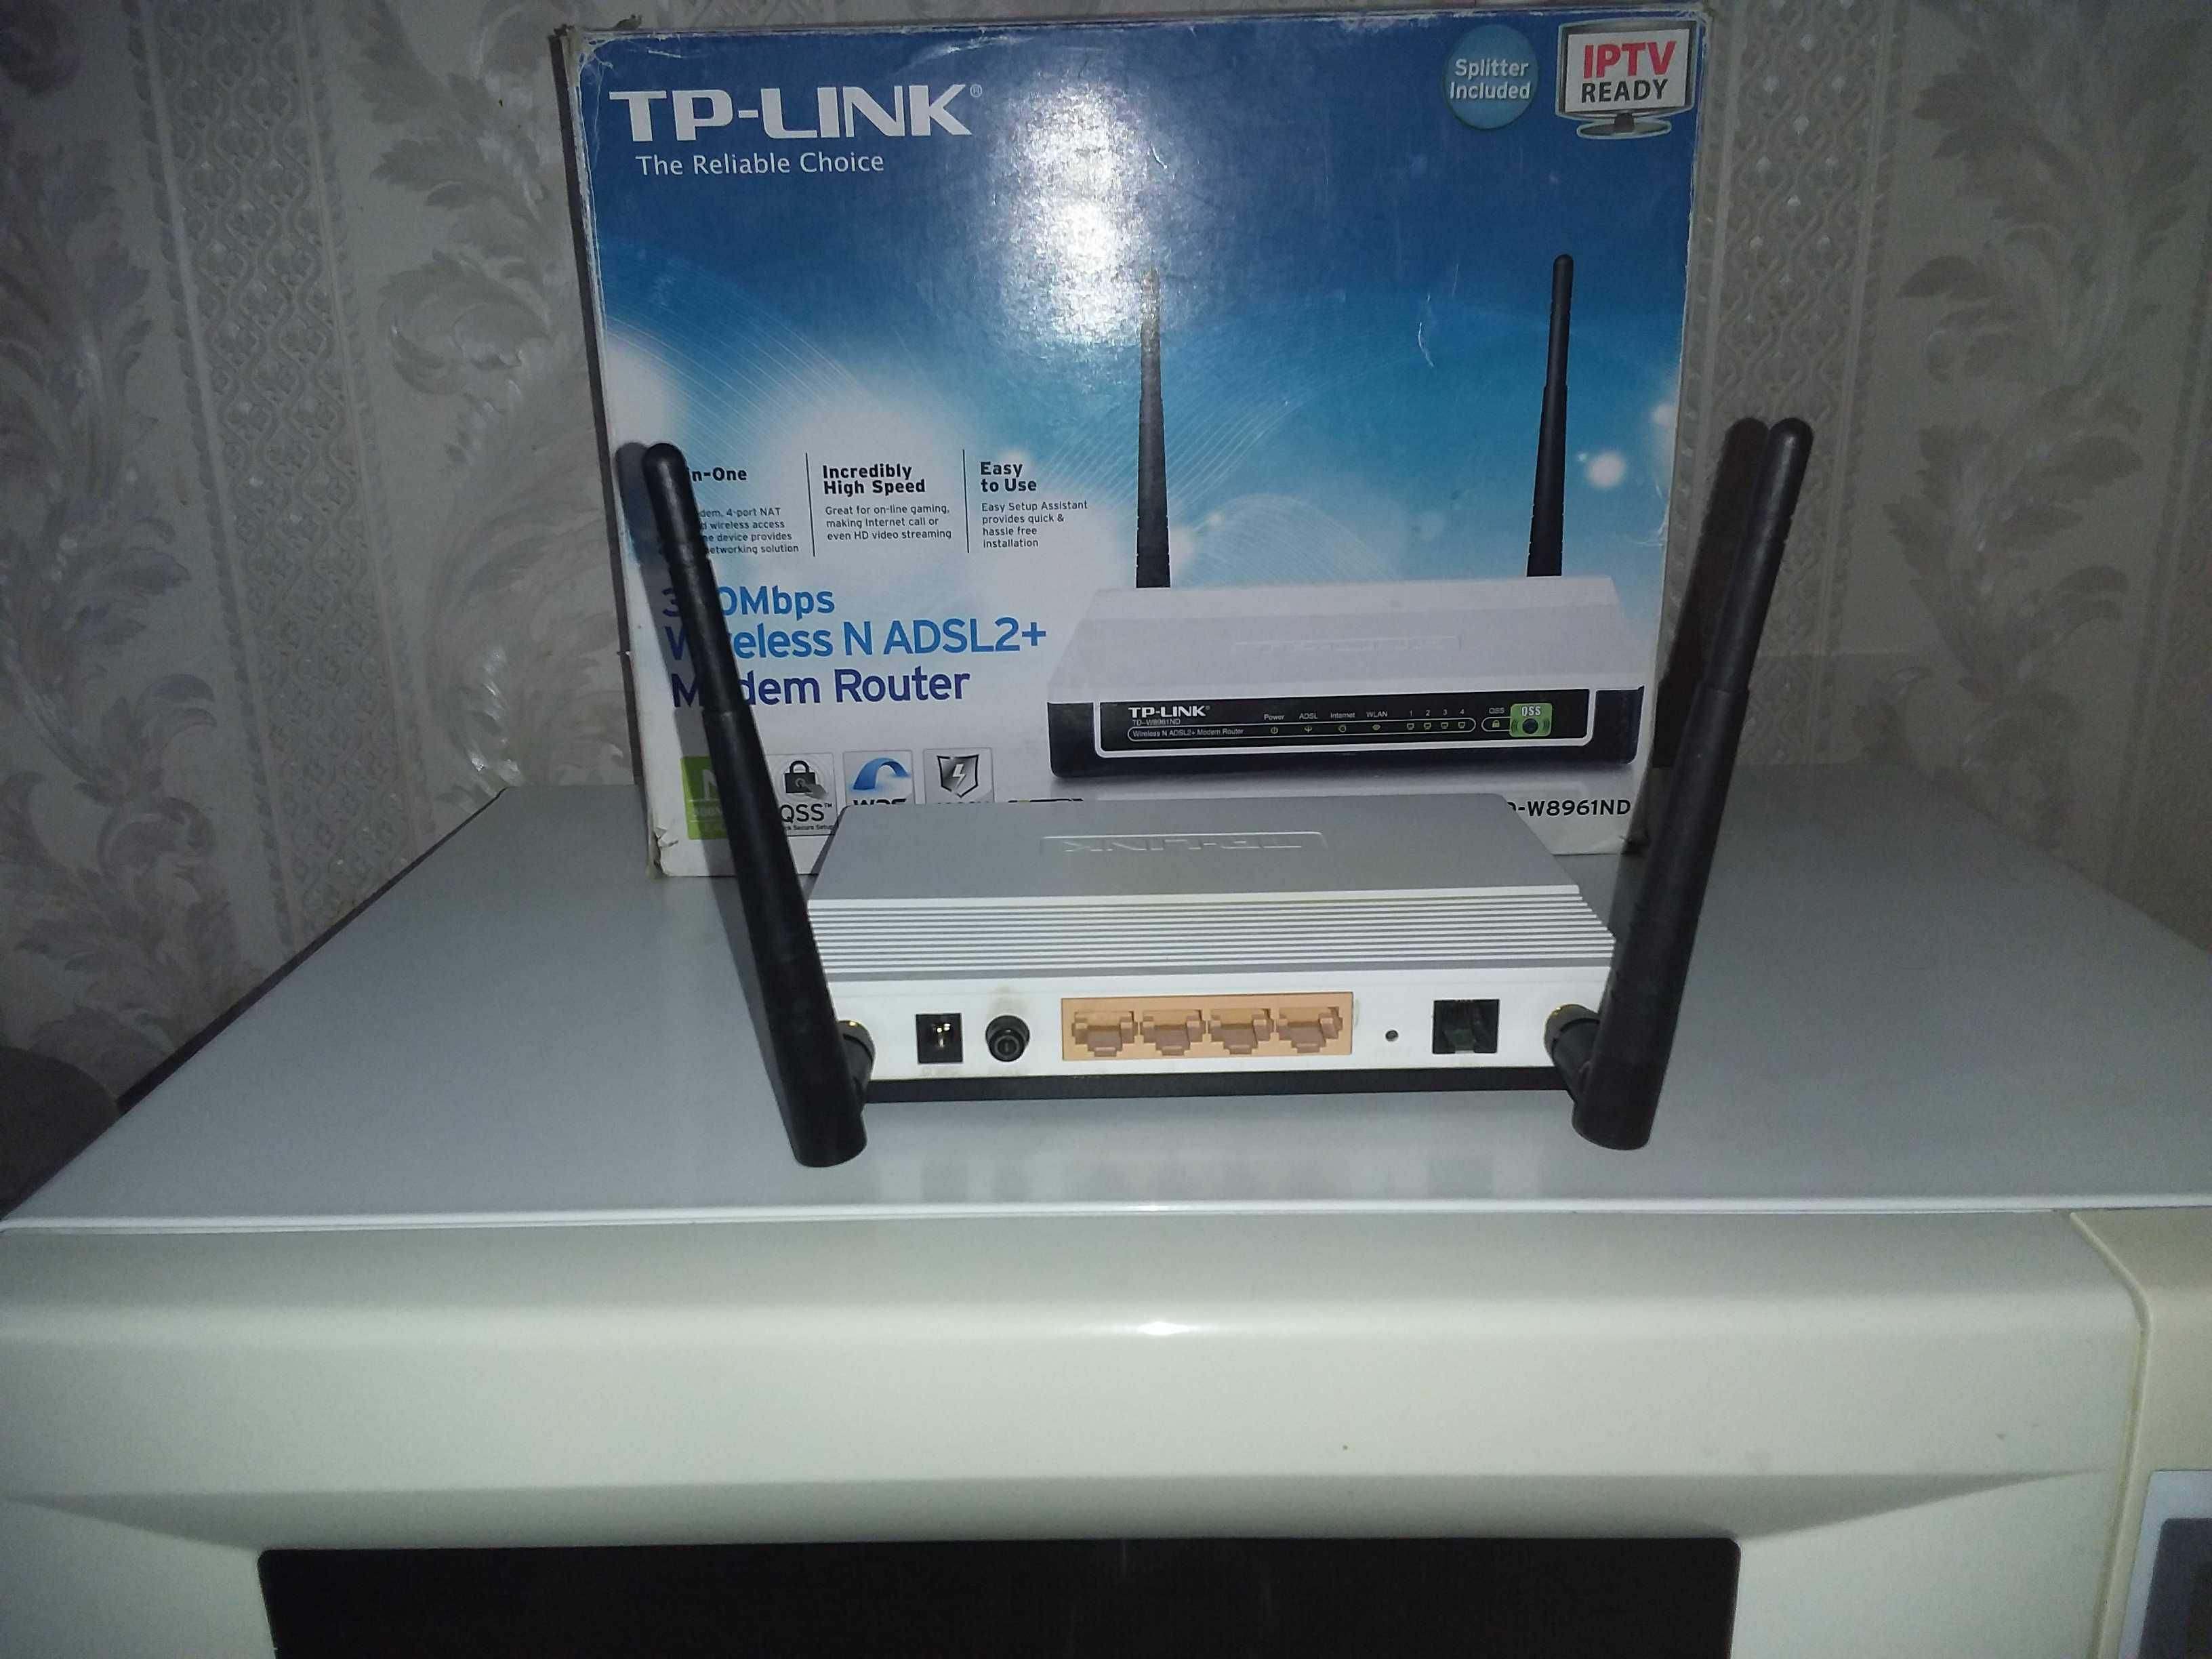 WI-FI router Вай-Фай роутер TP-LINK TD-W8961ND 300 Мбит/с ADSL2+ IPTV